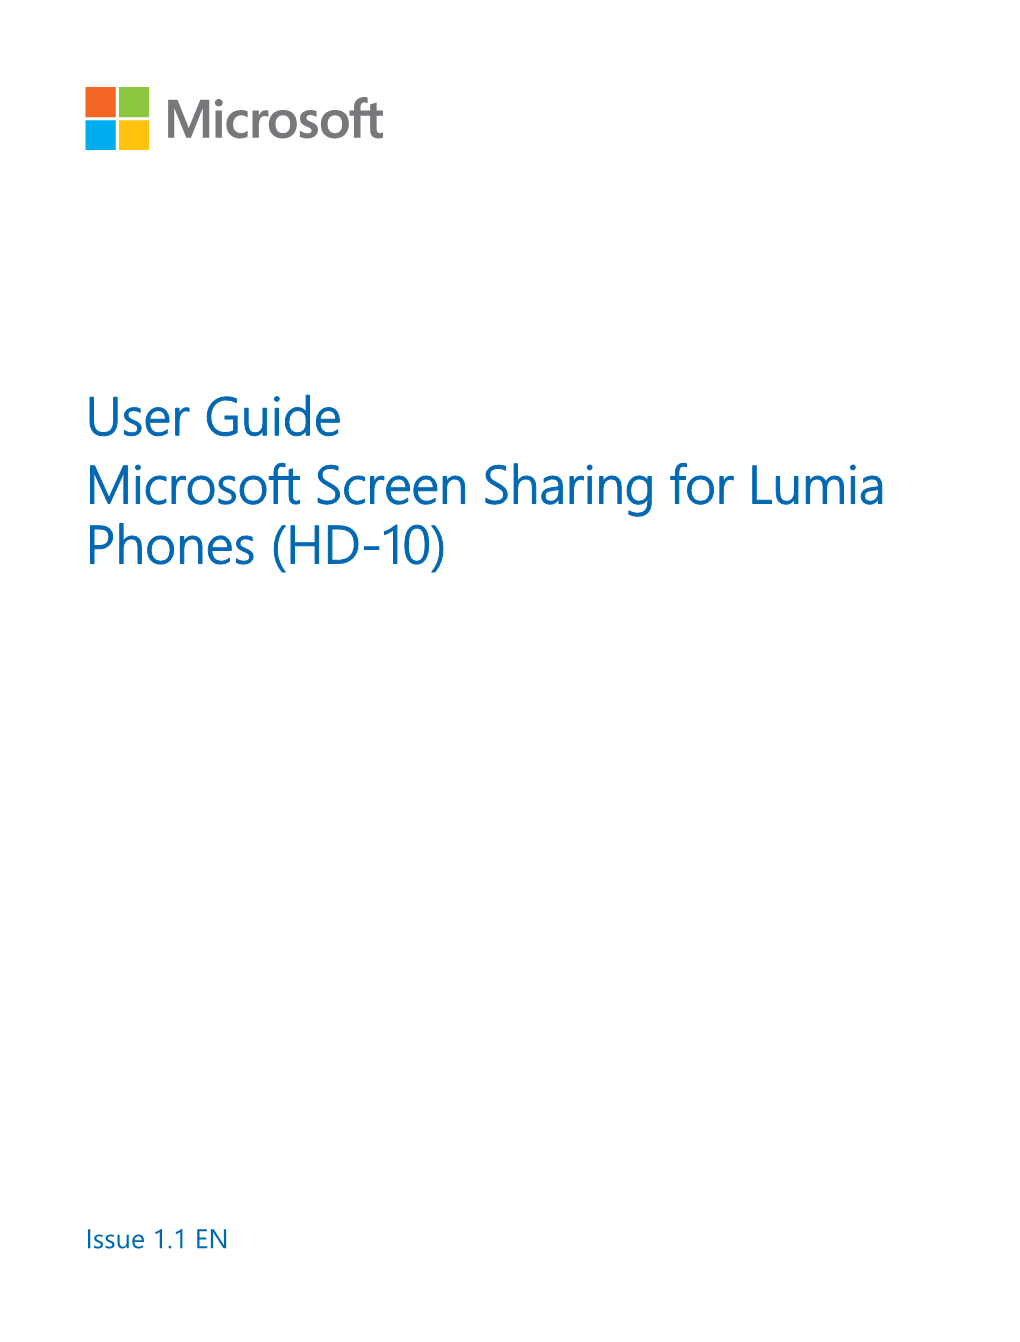 Microsoft Screen Sharing for Lumia Phones (HD-10) User Guide